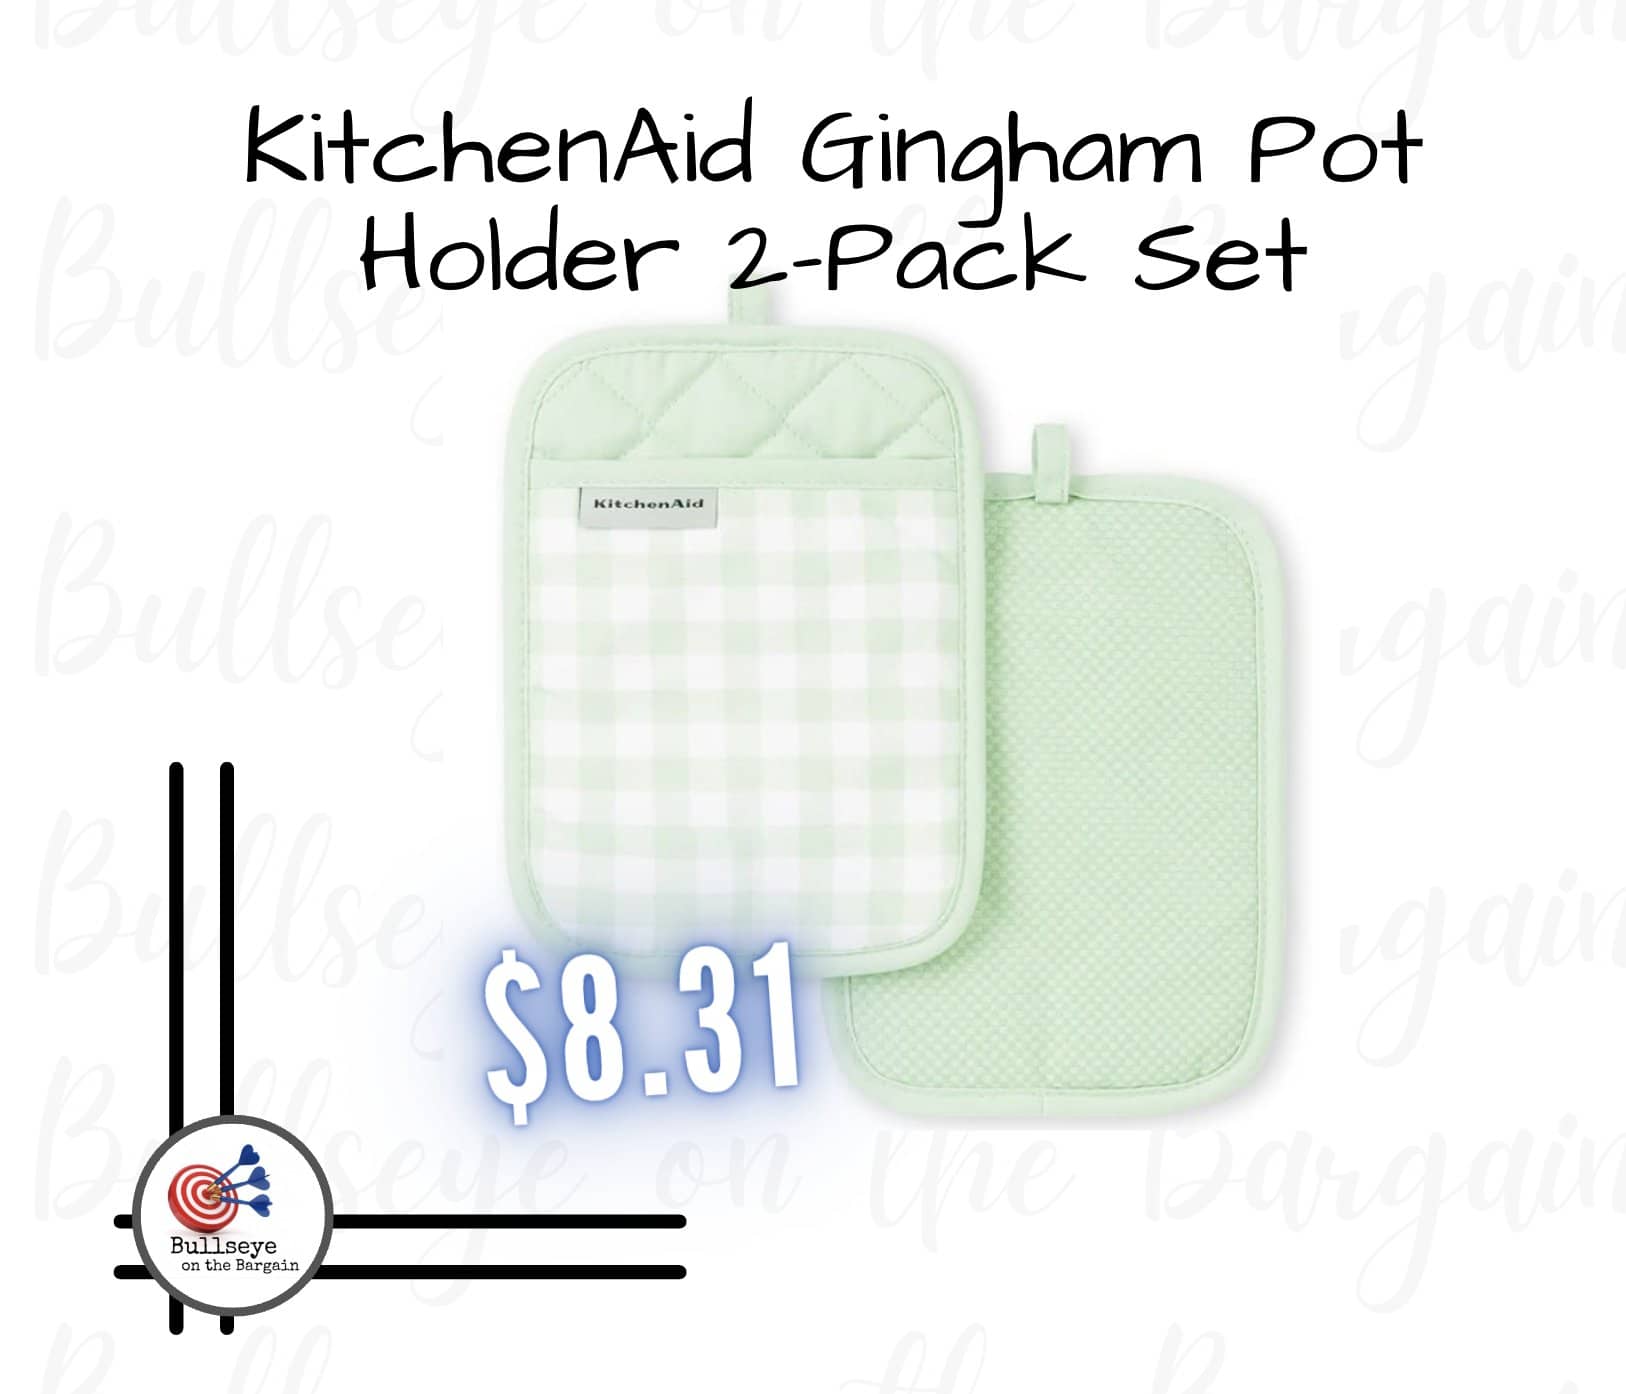 KitchenAid Gingham Pot Holder 2-Pack Set PRICE DROP!!!